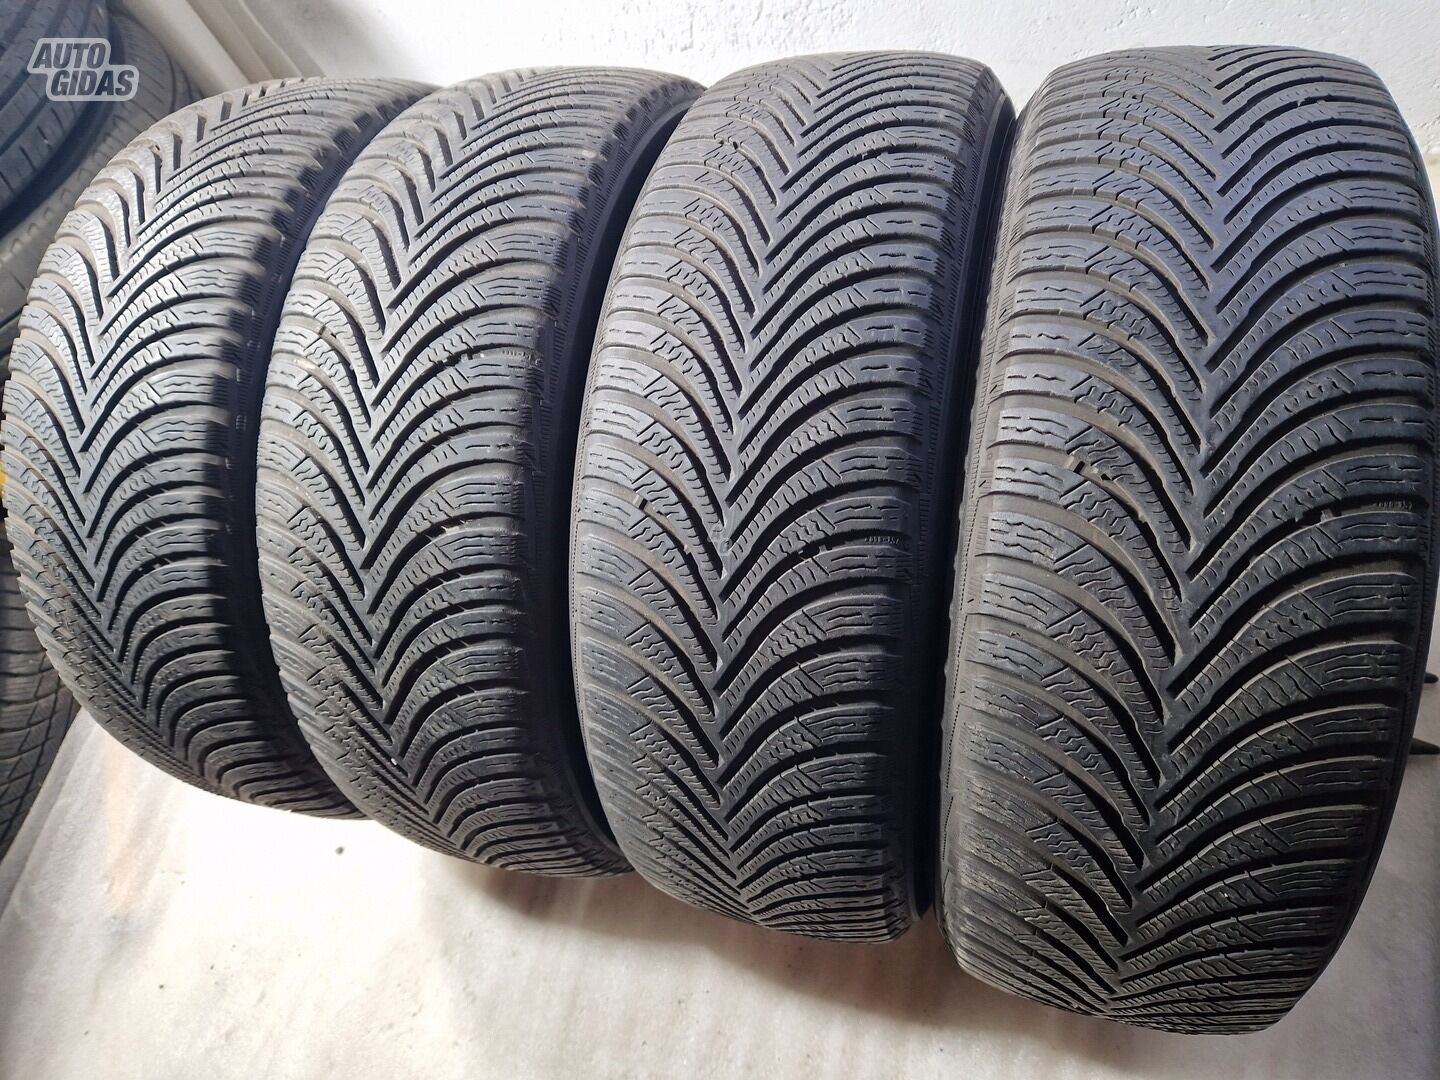 Michelin 5mm, 2019m R16 winter tyres passanger car